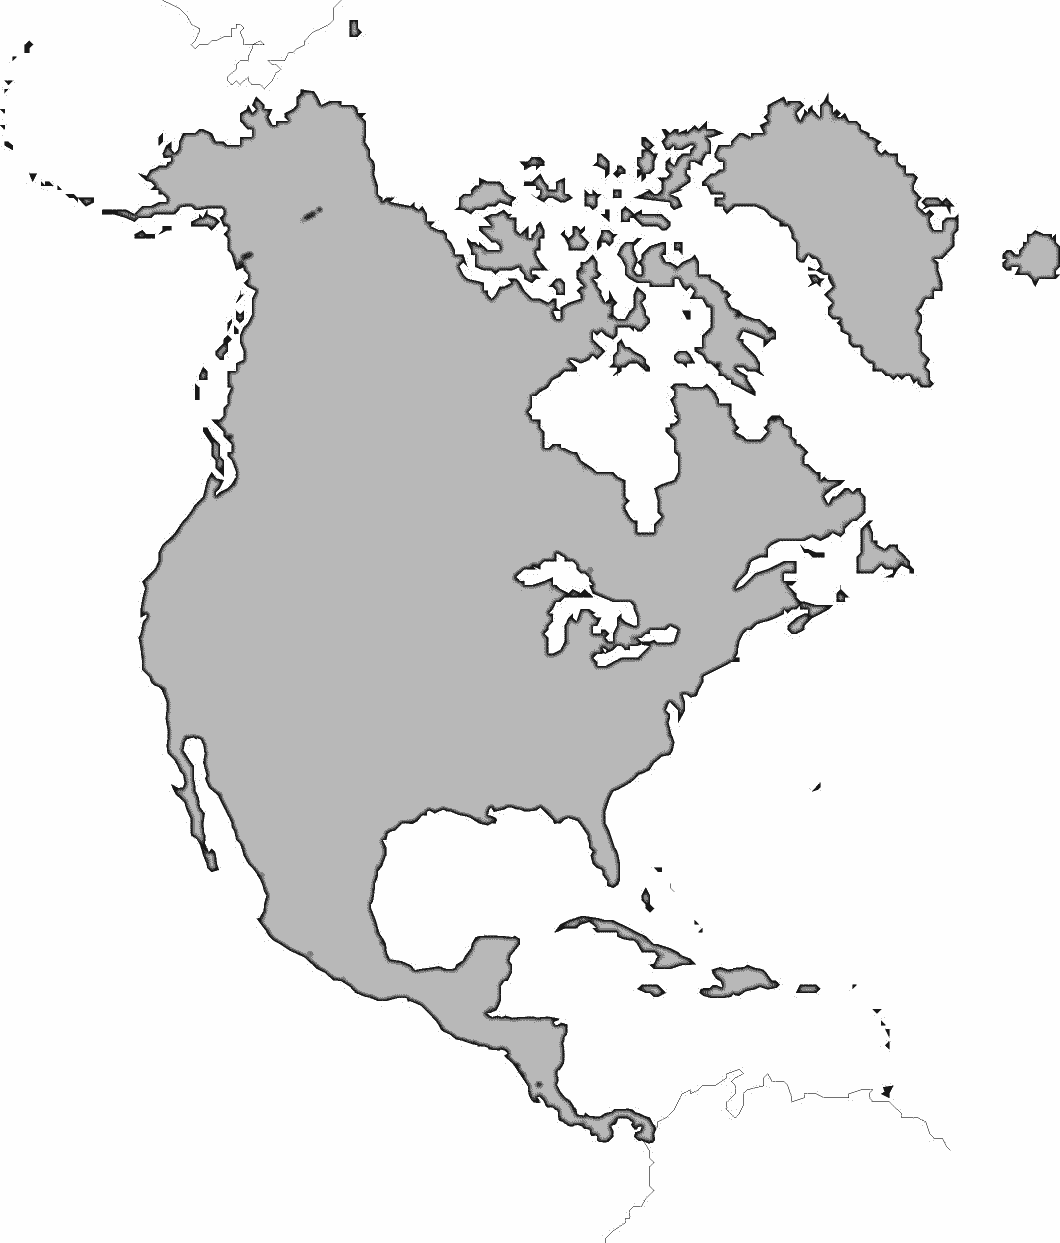 North America large